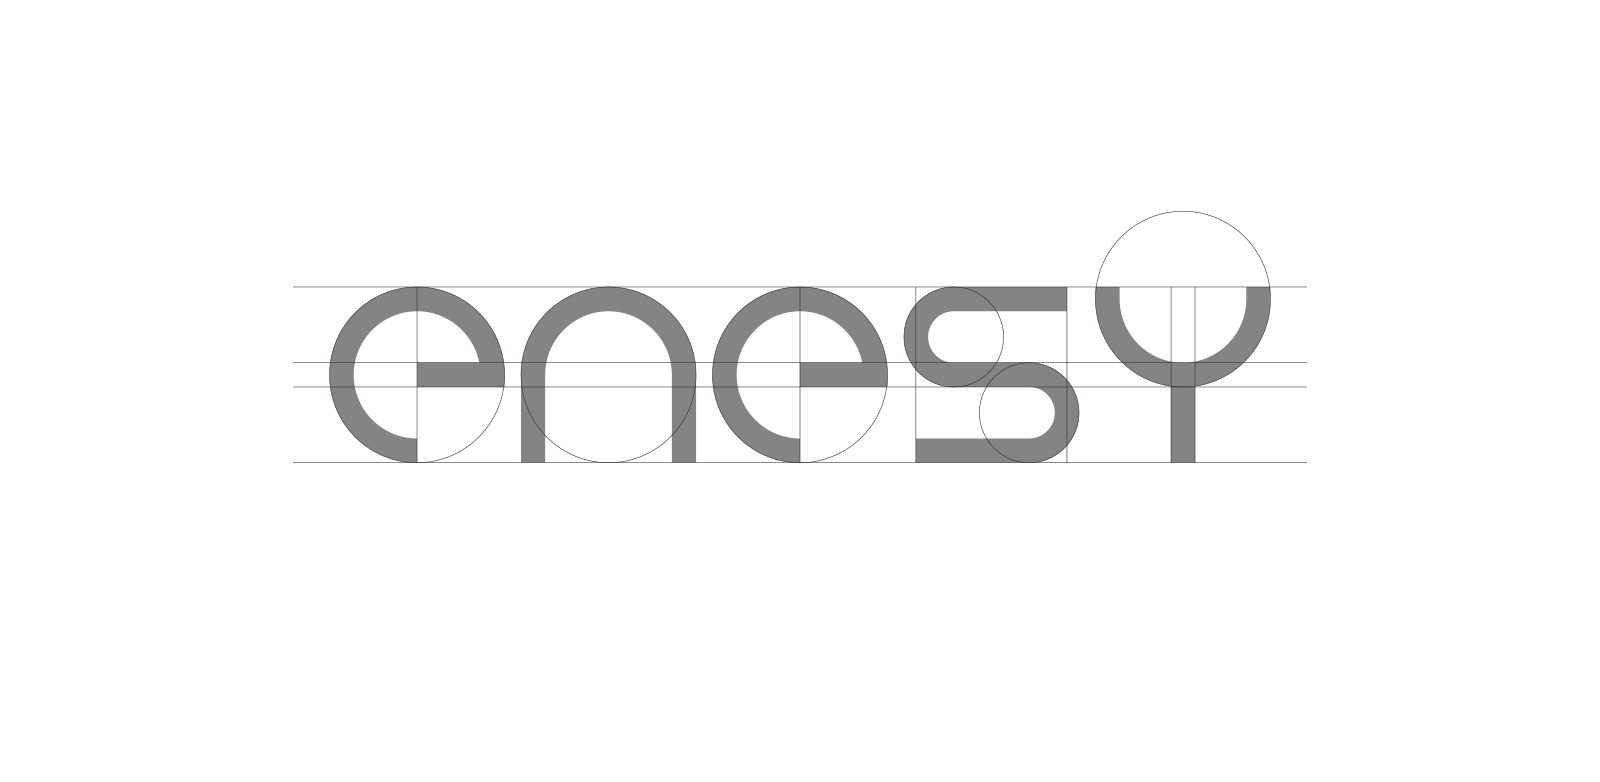 Création du logo Enesy